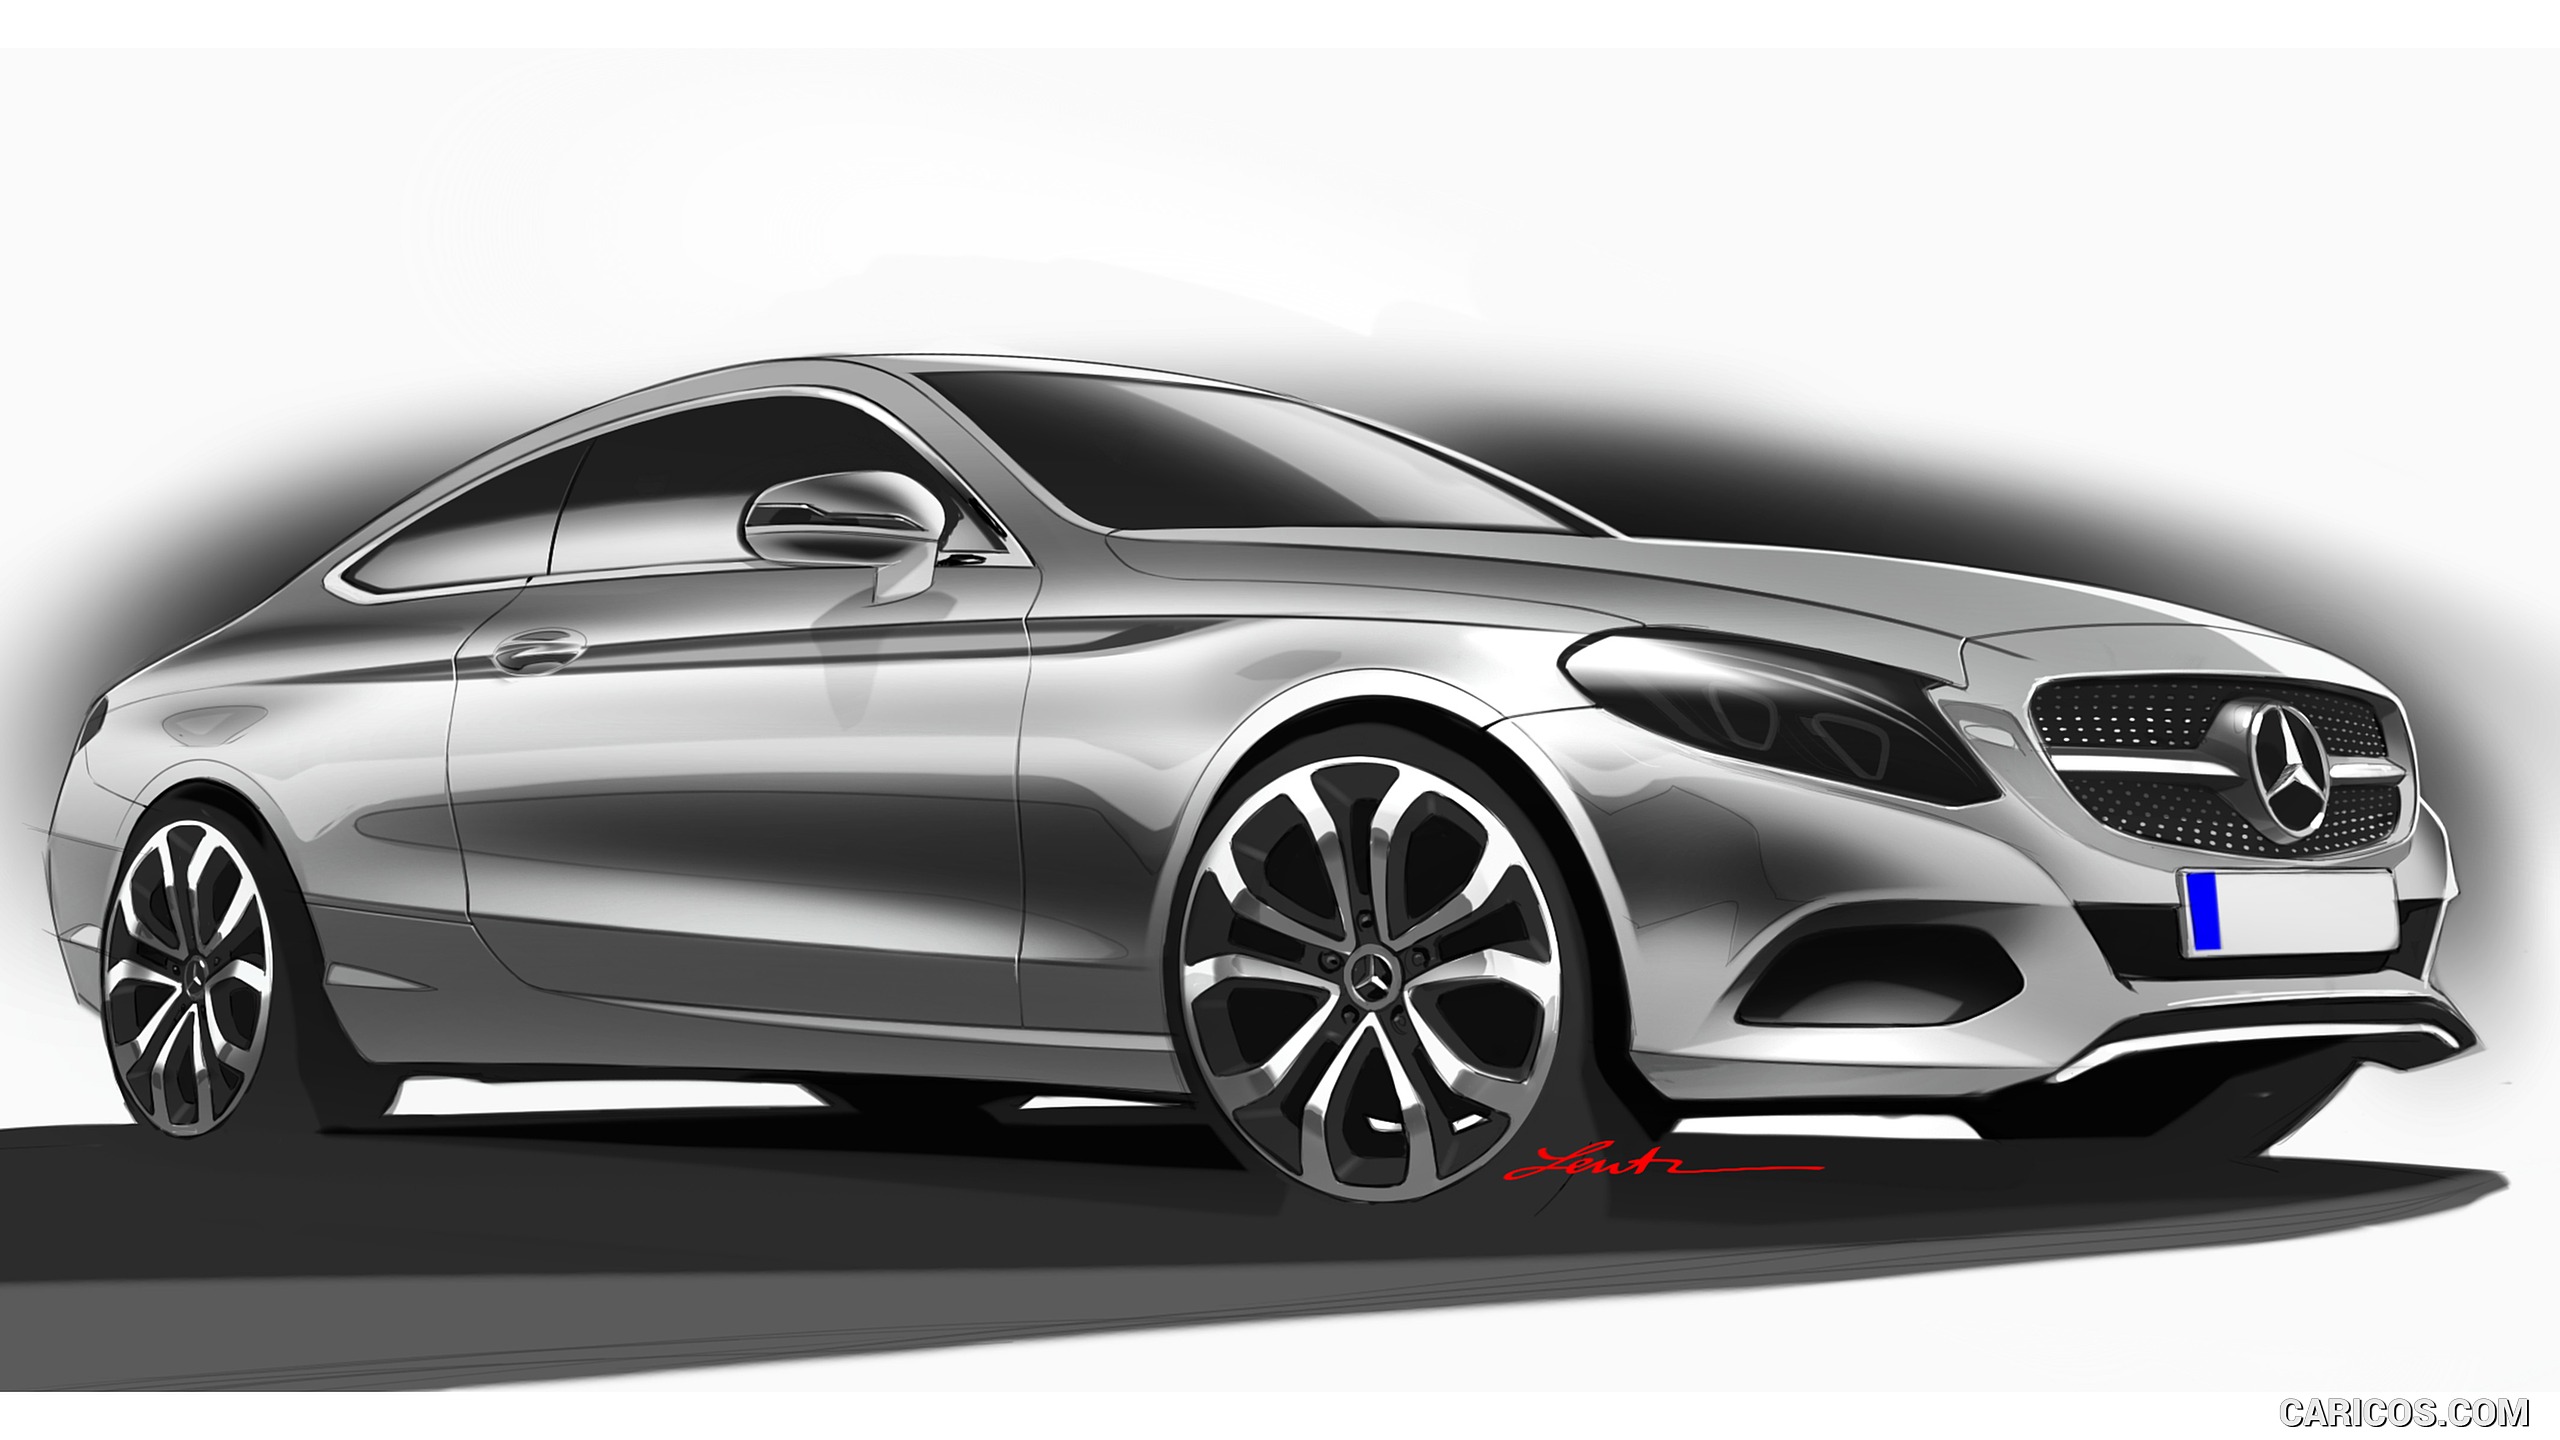 2017 Mercedes-Benz C-Class Coupe - Design Sketch, #79 of 210